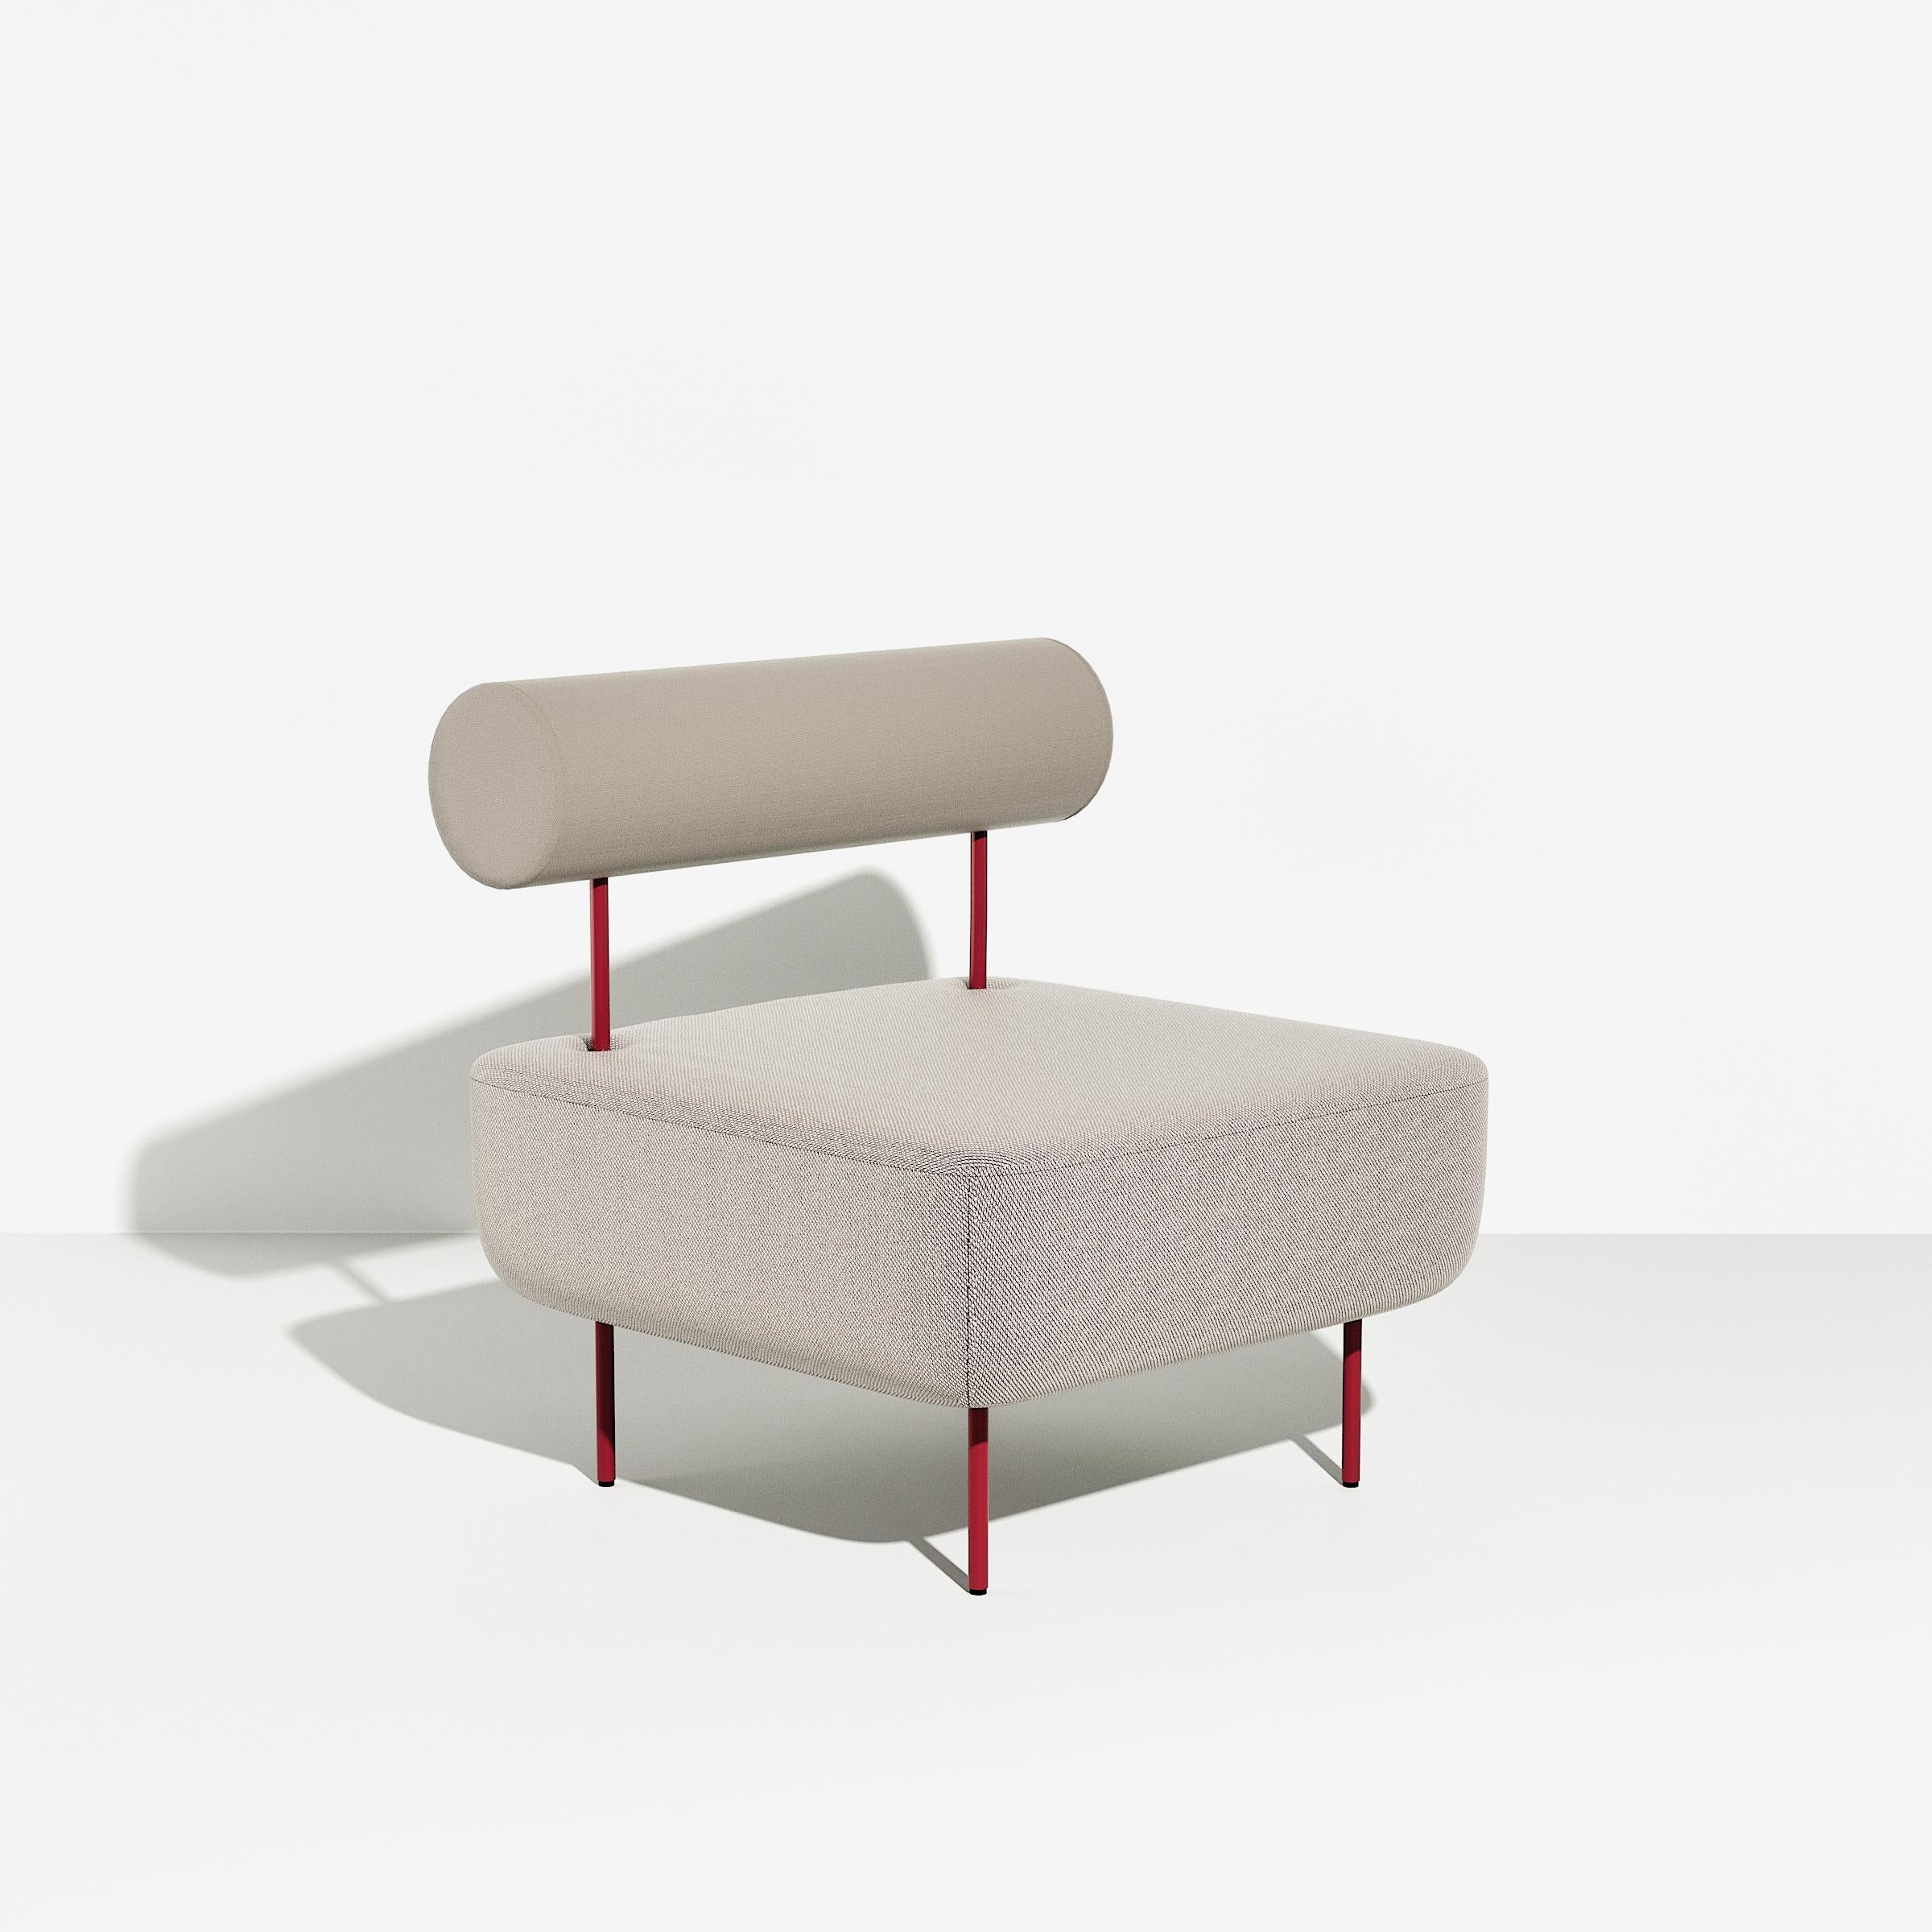 European Petite Friture Medium Hoff Armchair in Grey-Beige by Morten & Jonas, 2015 For Sale